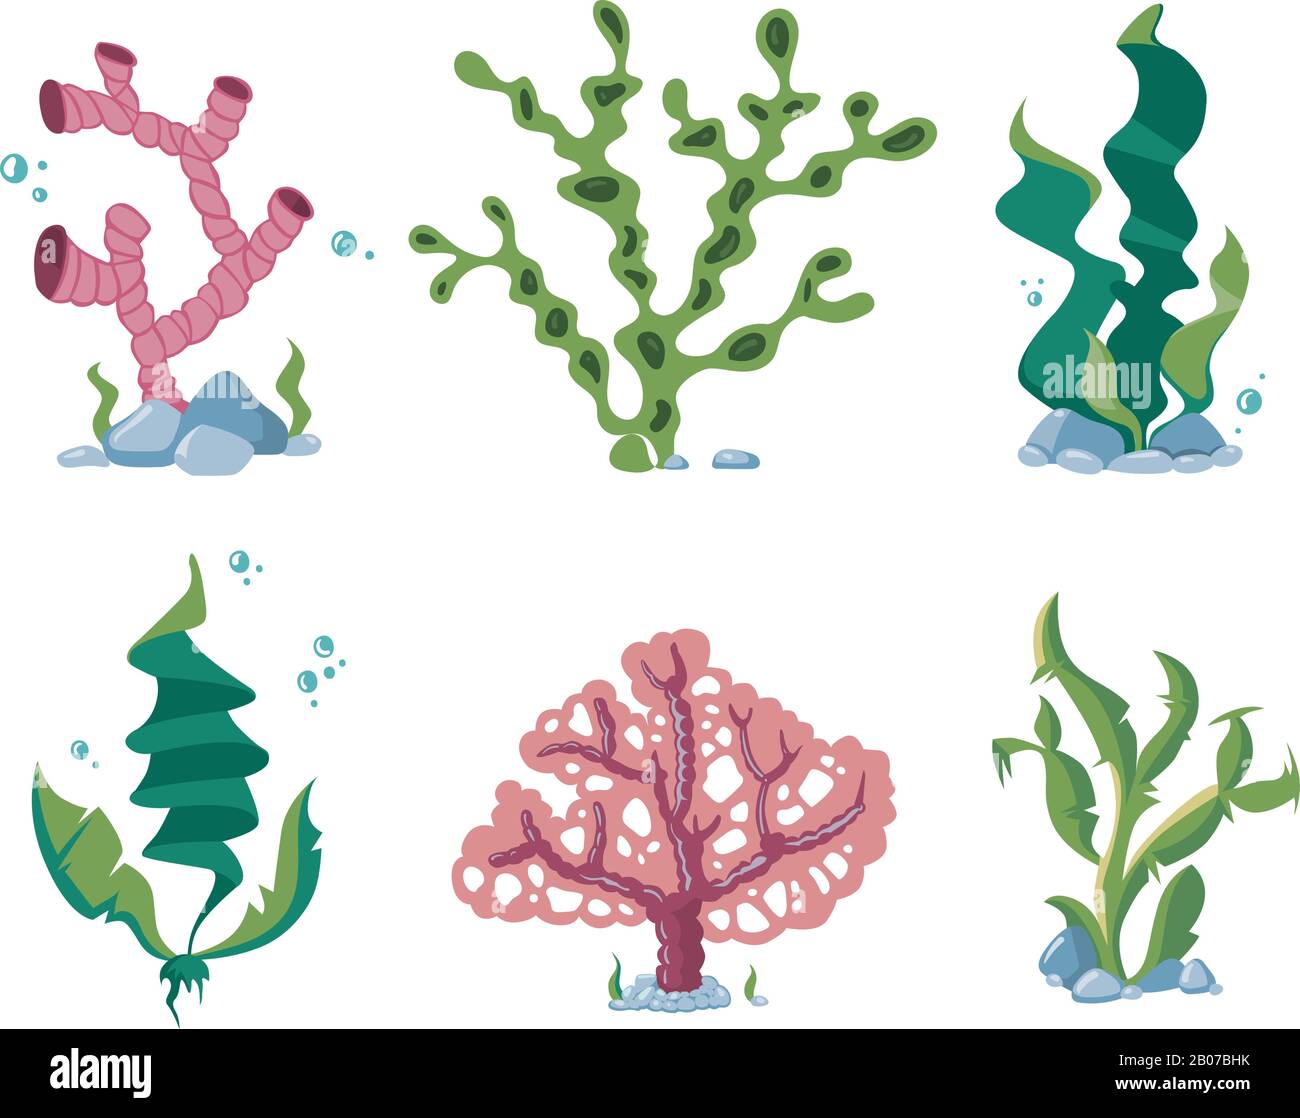 Algue sous-marine, varech d'aqua, océan et aquarium plantes vecteur ensemble. Illustration de la vie du varech de la nature aquatique Illustration de Vecteur